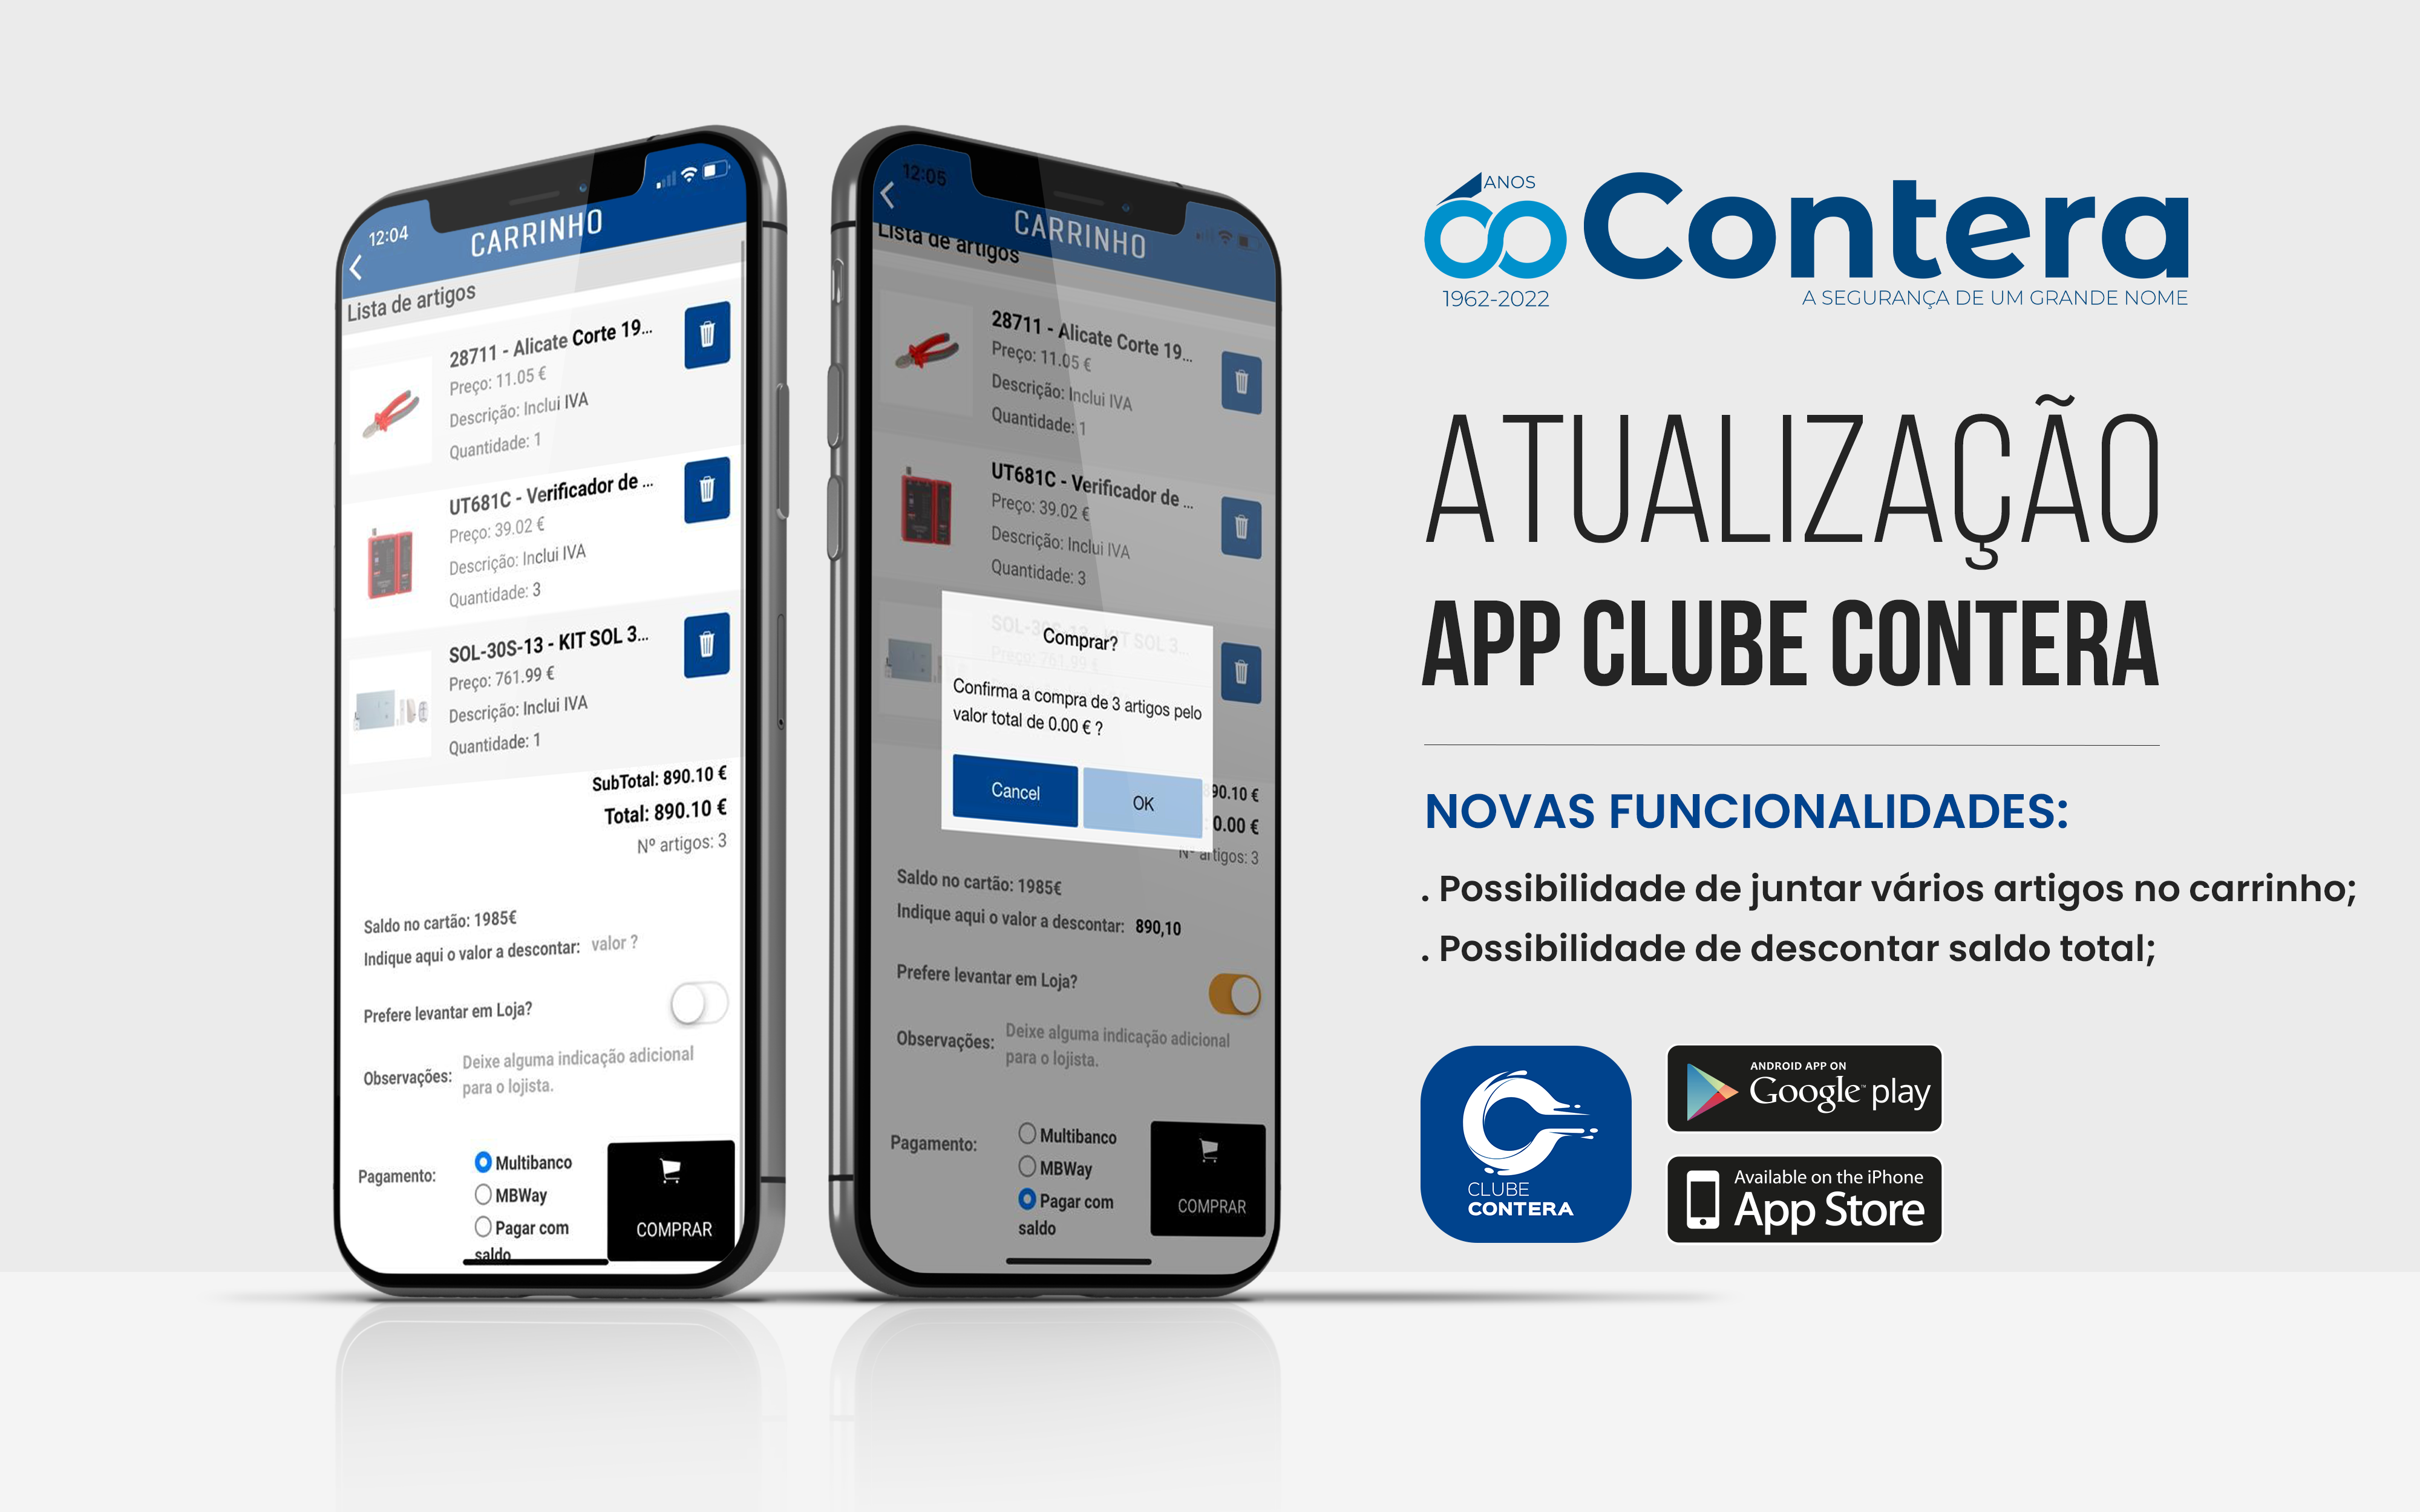 https://bo.contera.pt/fileuploads/AEmpresa/Loja/App_Contera_Update.png